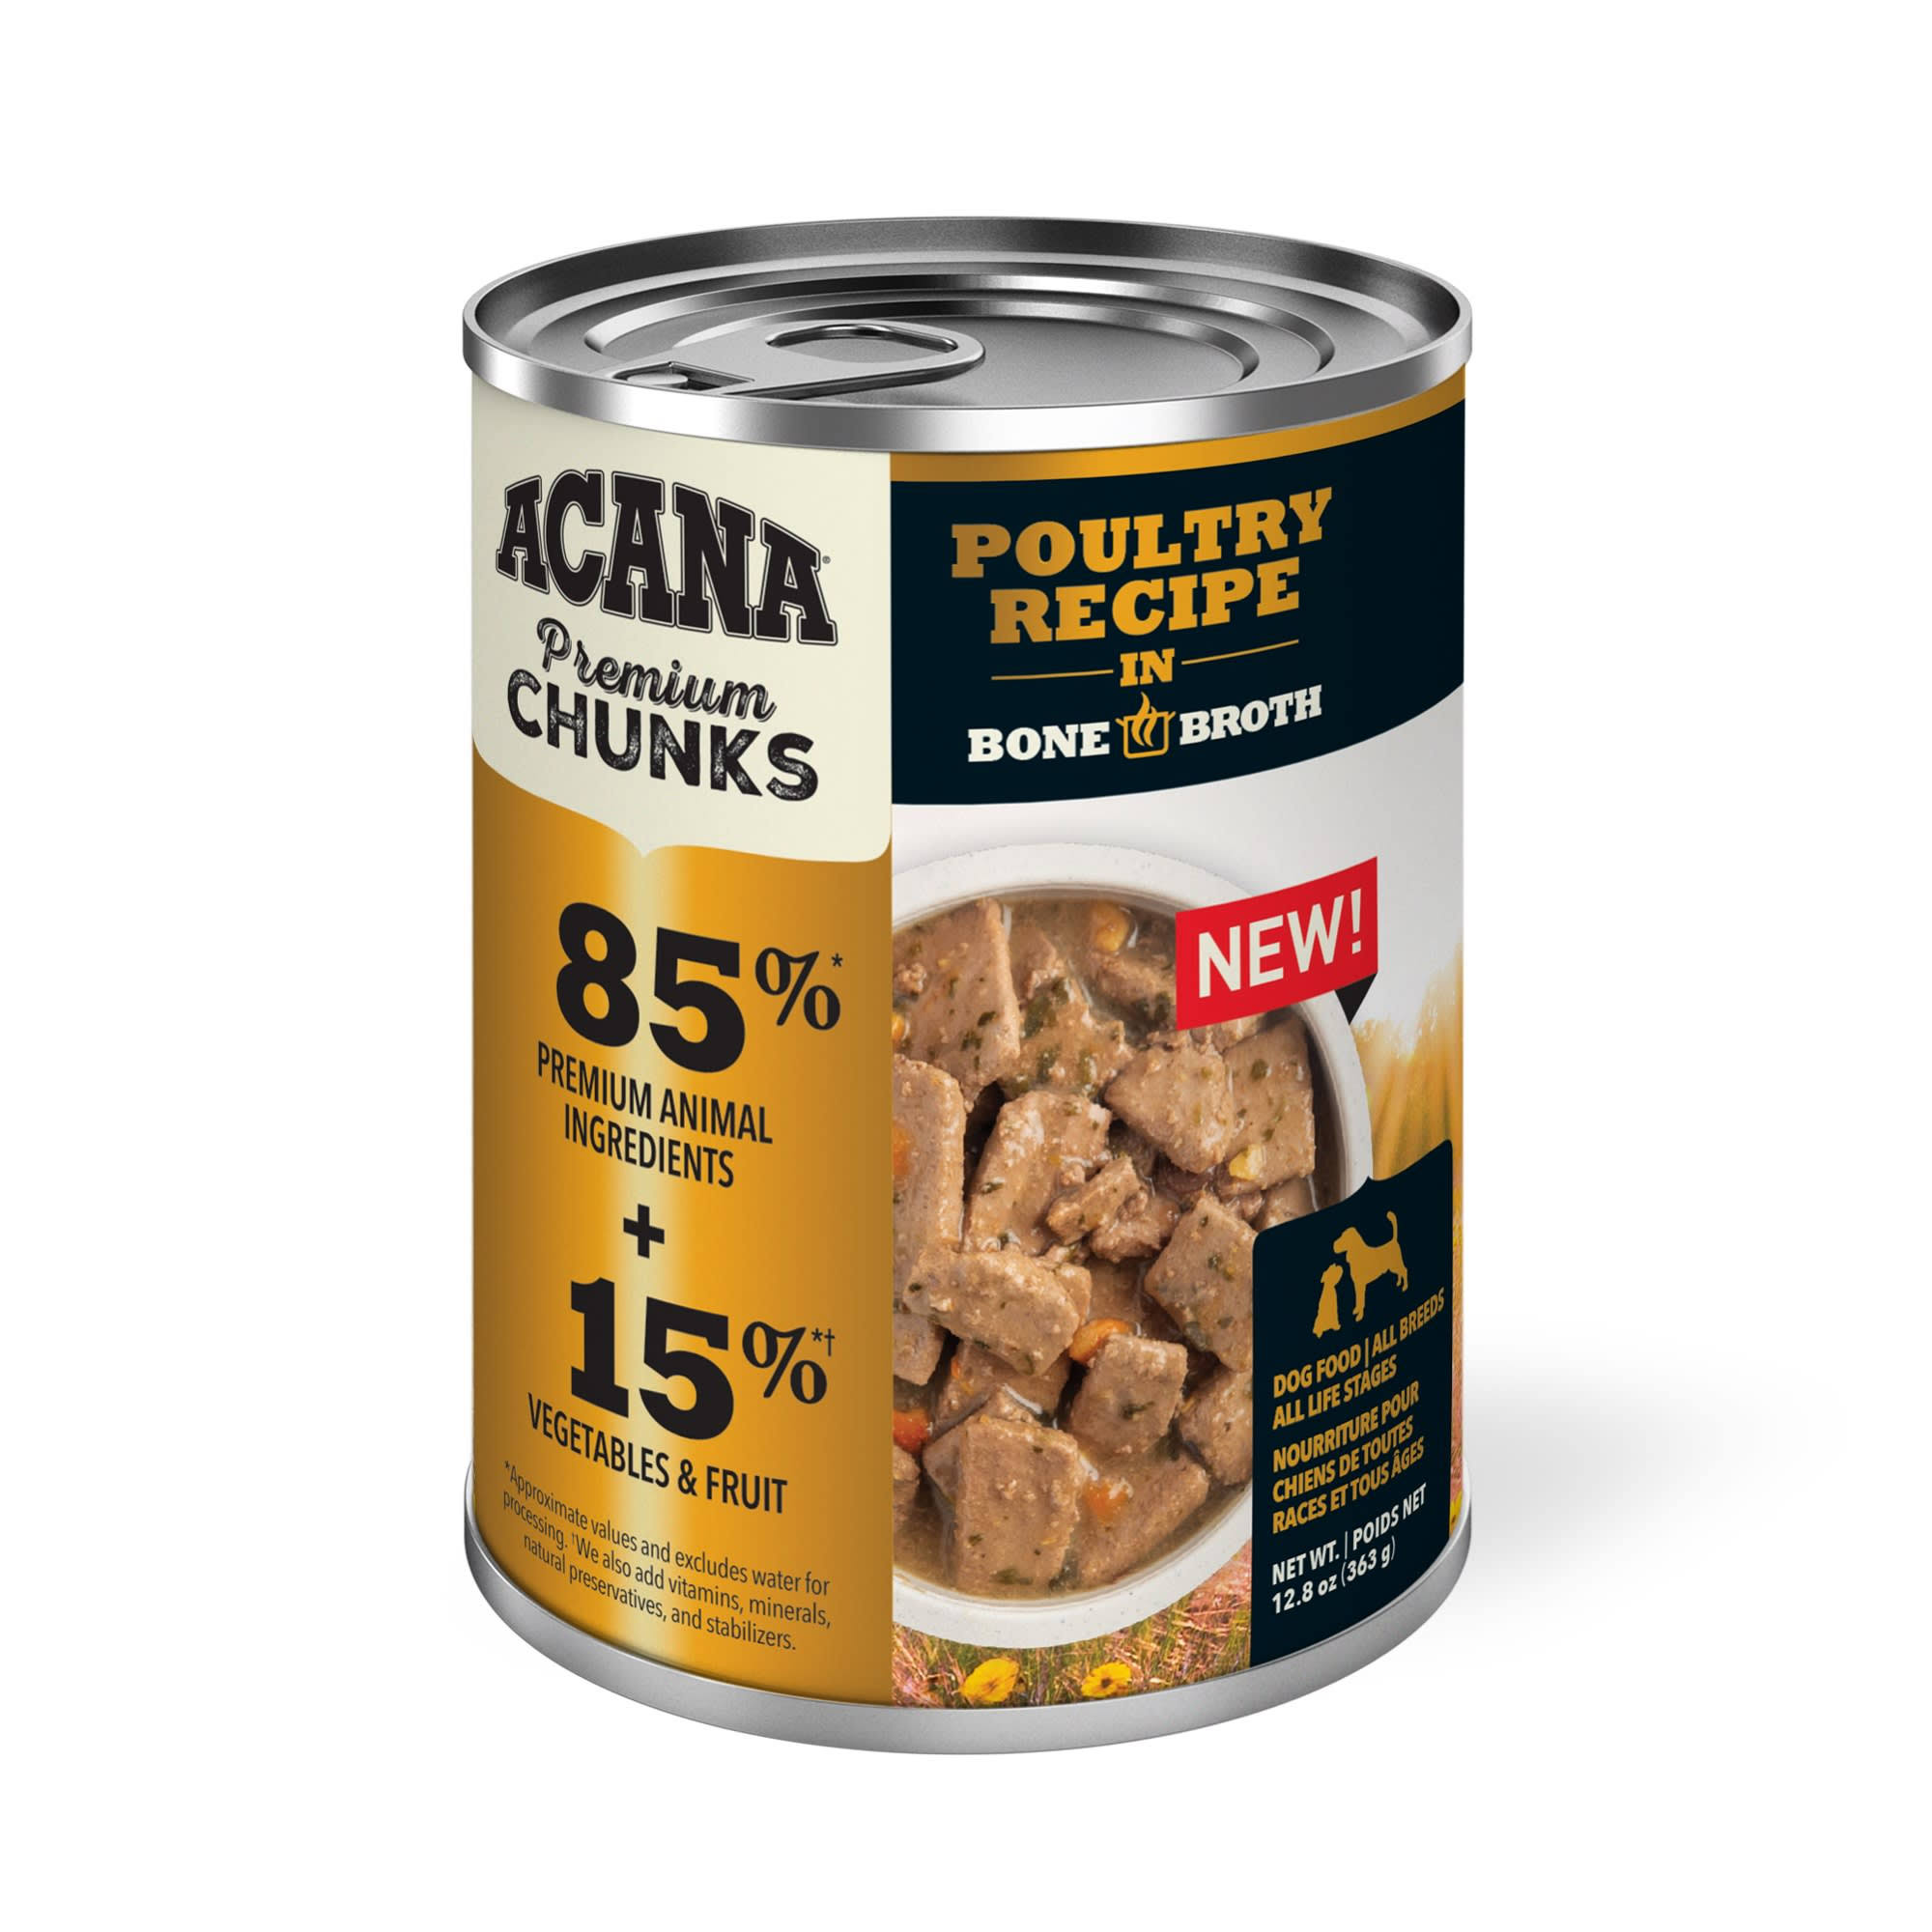 ACANA Premium Chunks Poultry Recipe in Bone Broth Wet Dog Food, 12.8-oz, Case of 12